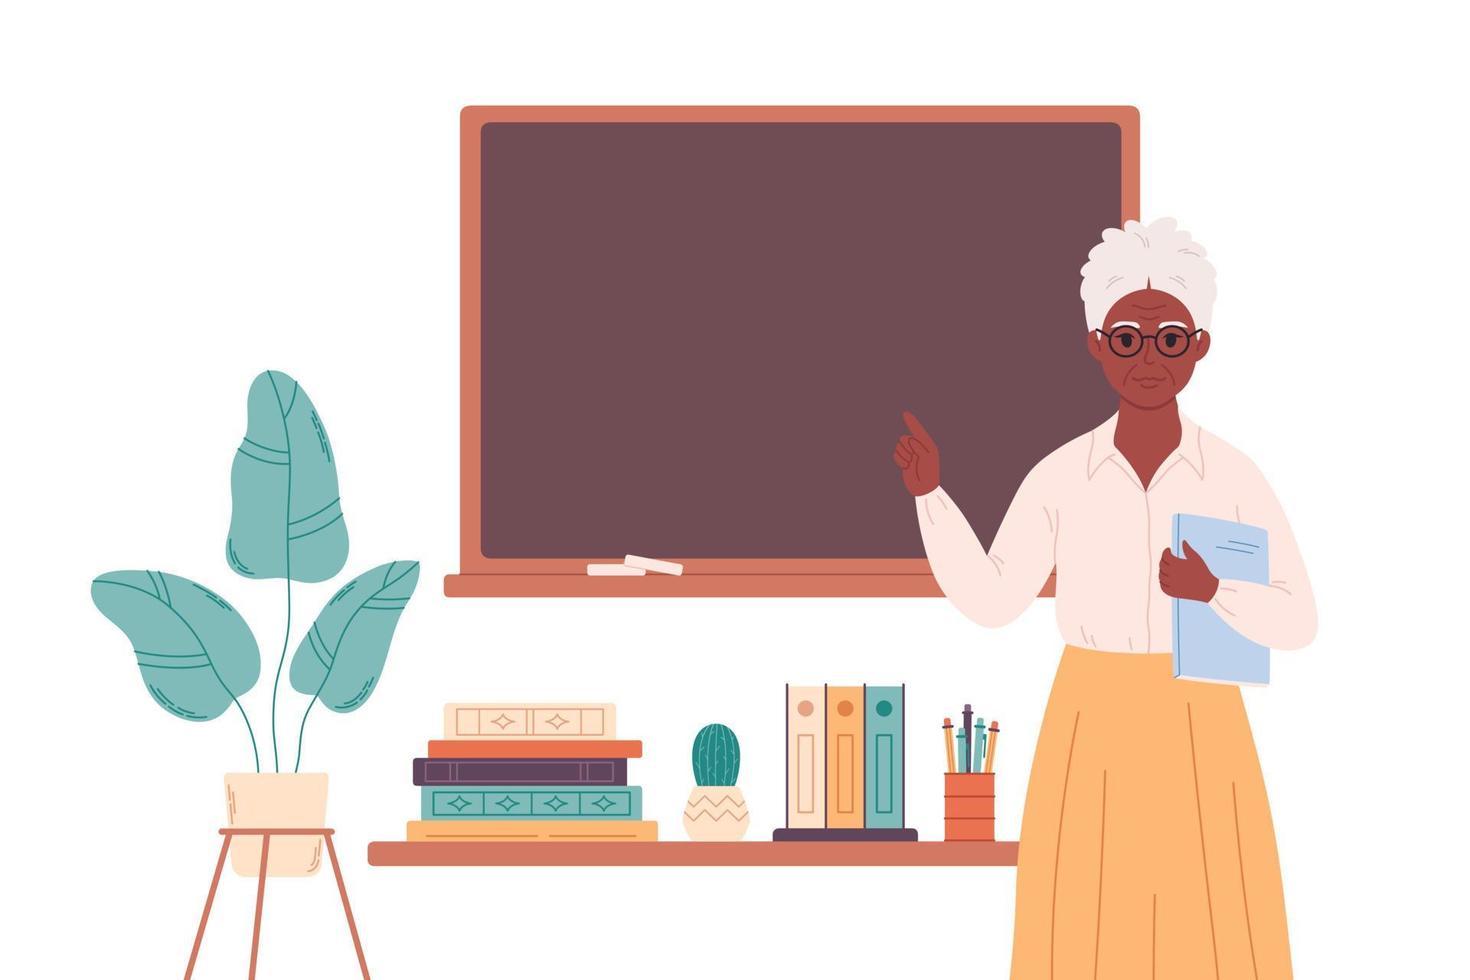 antiguo negro hembra profesor a salón de clases cerca pizarra. educación, conferencia y lección a escuela. vector